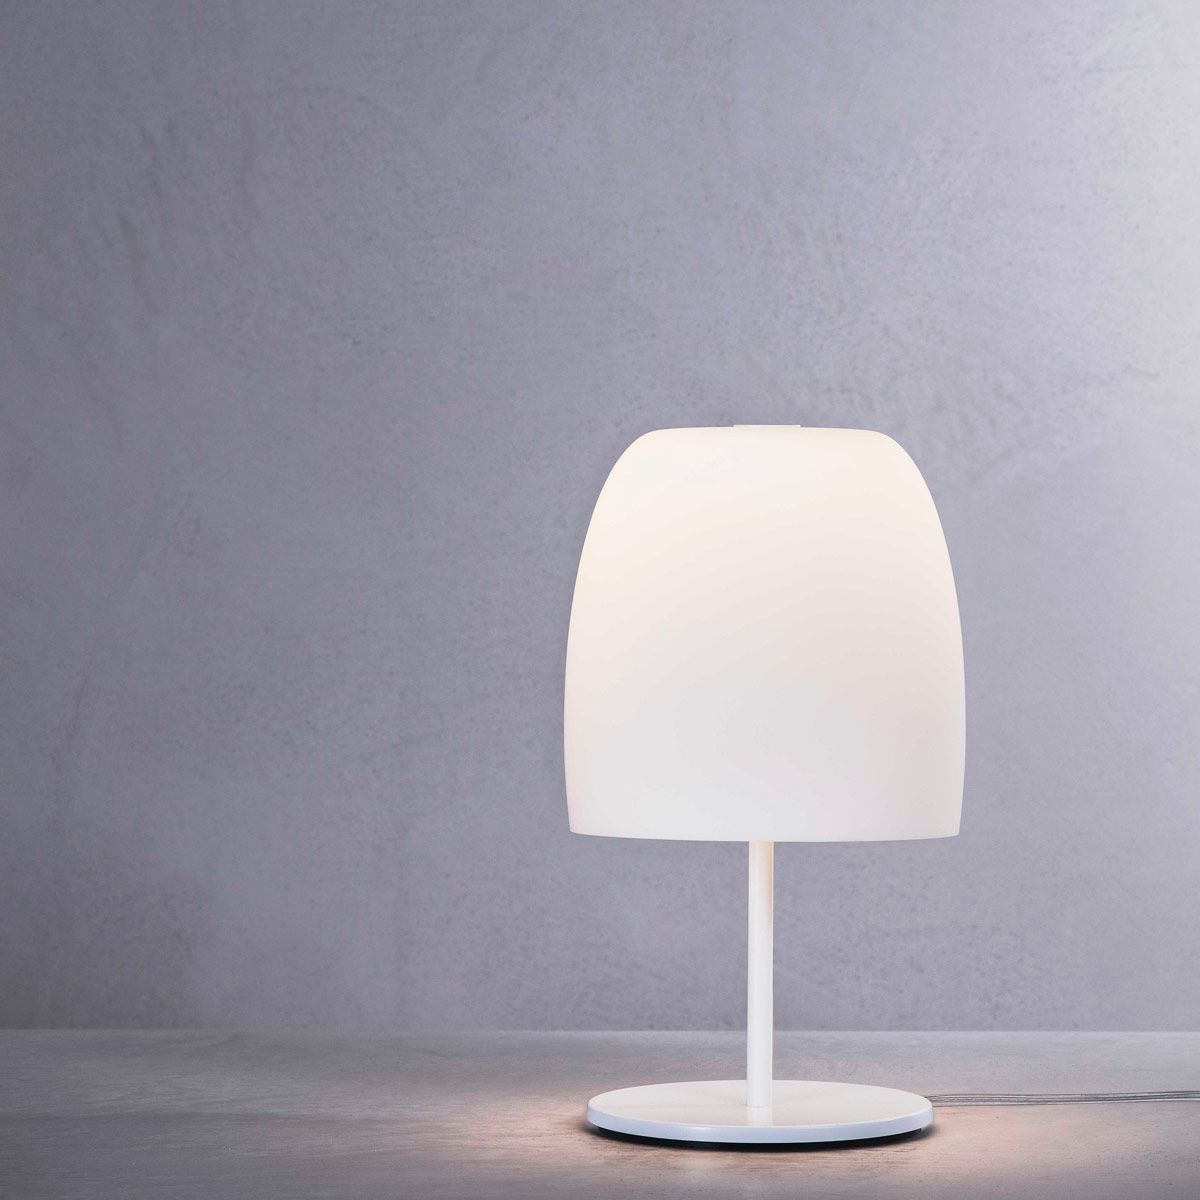 Notte Table Lamp By Prandina Usa, Long Stem Table Lamp